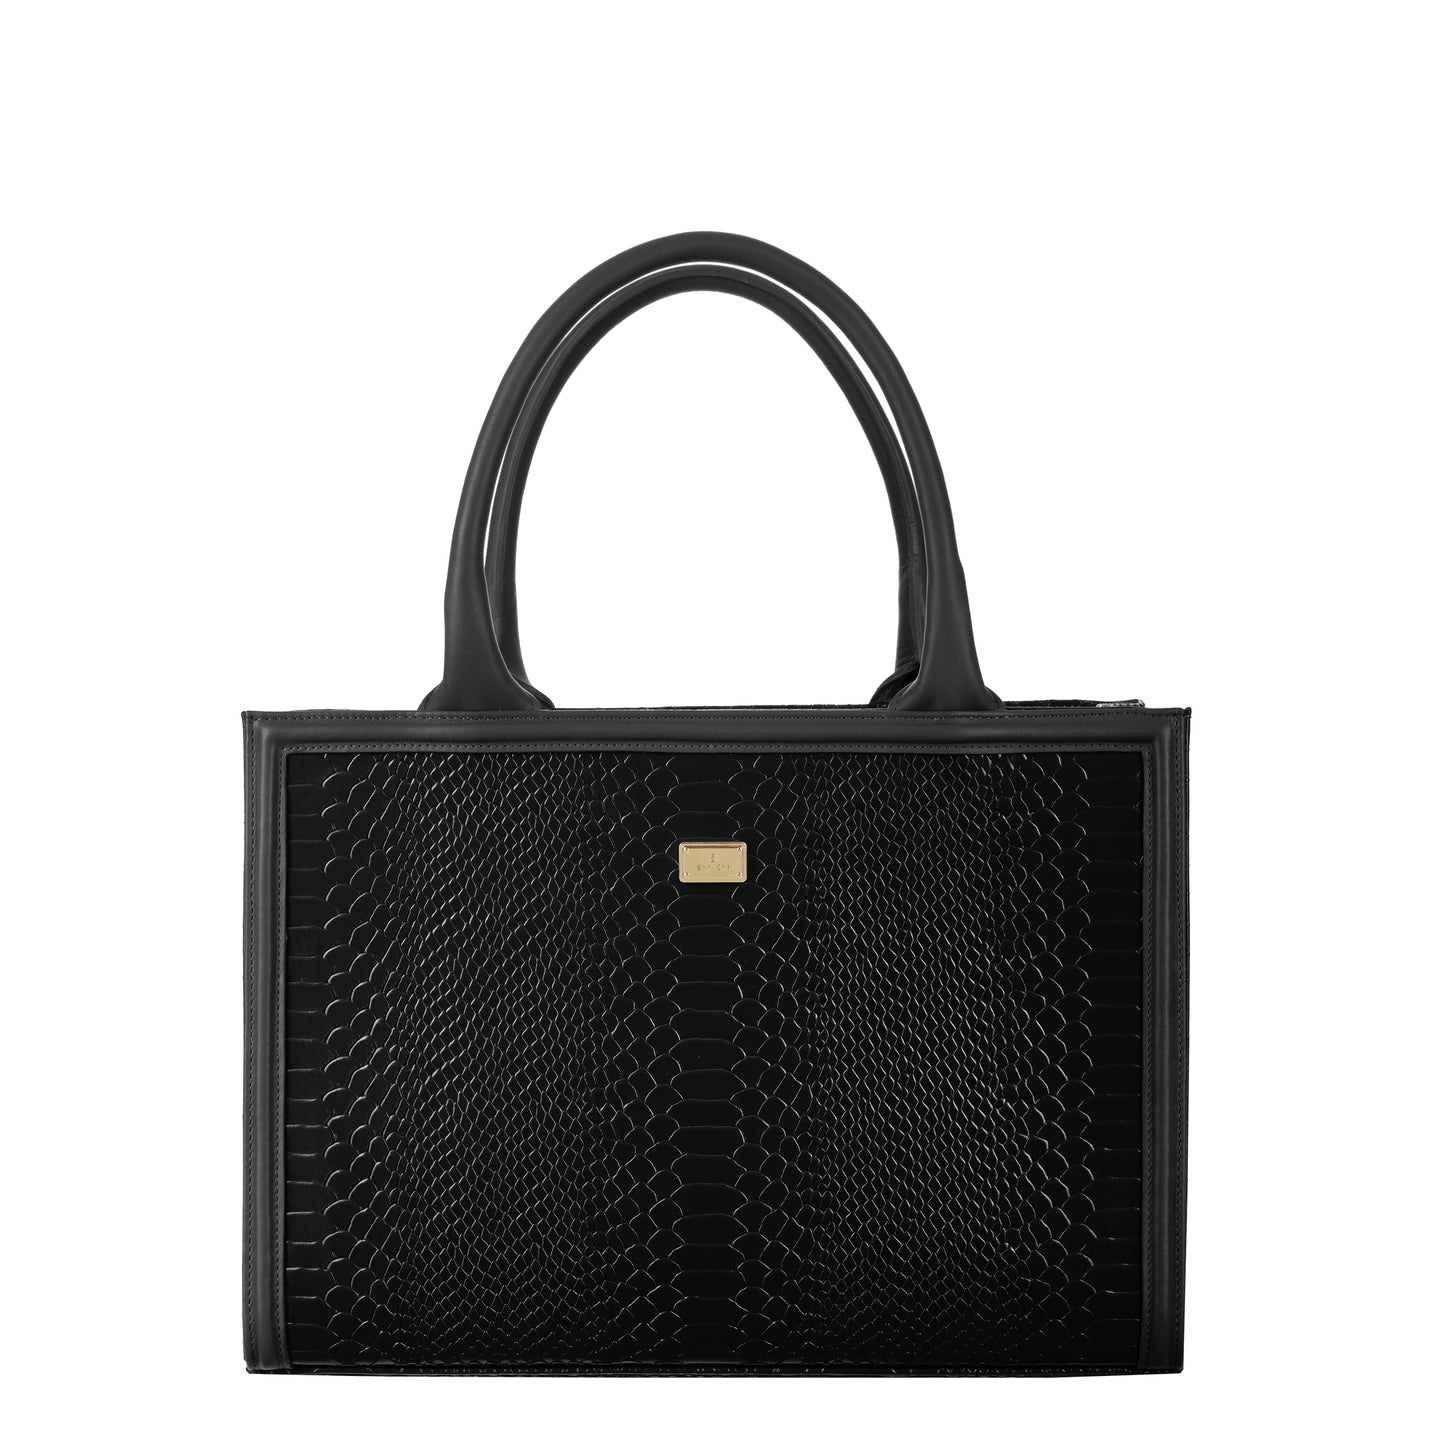 ANA BLACK women's leather handbag